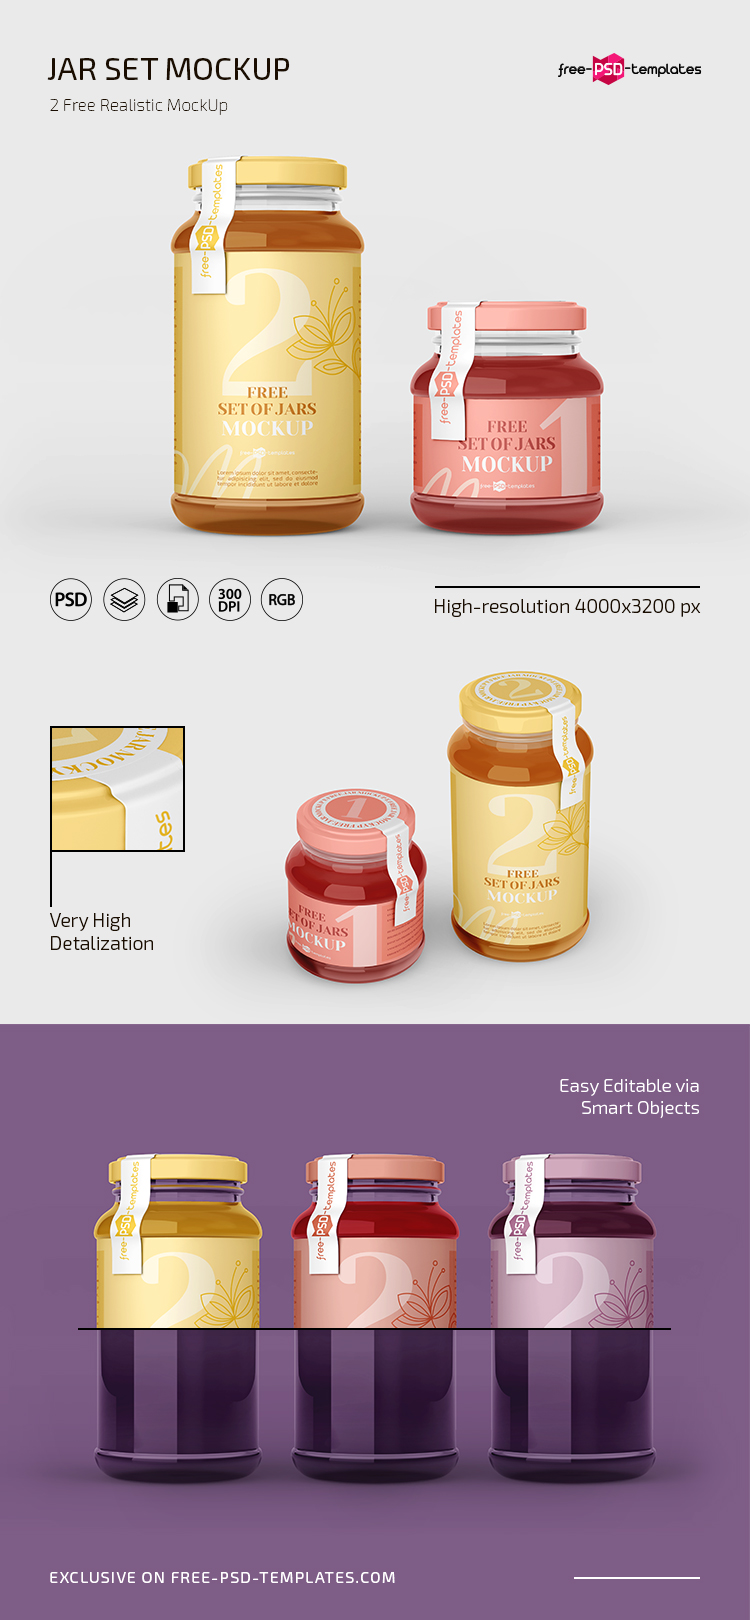 Download Free Jar Set Mockup in PSD | Free PSD Templates